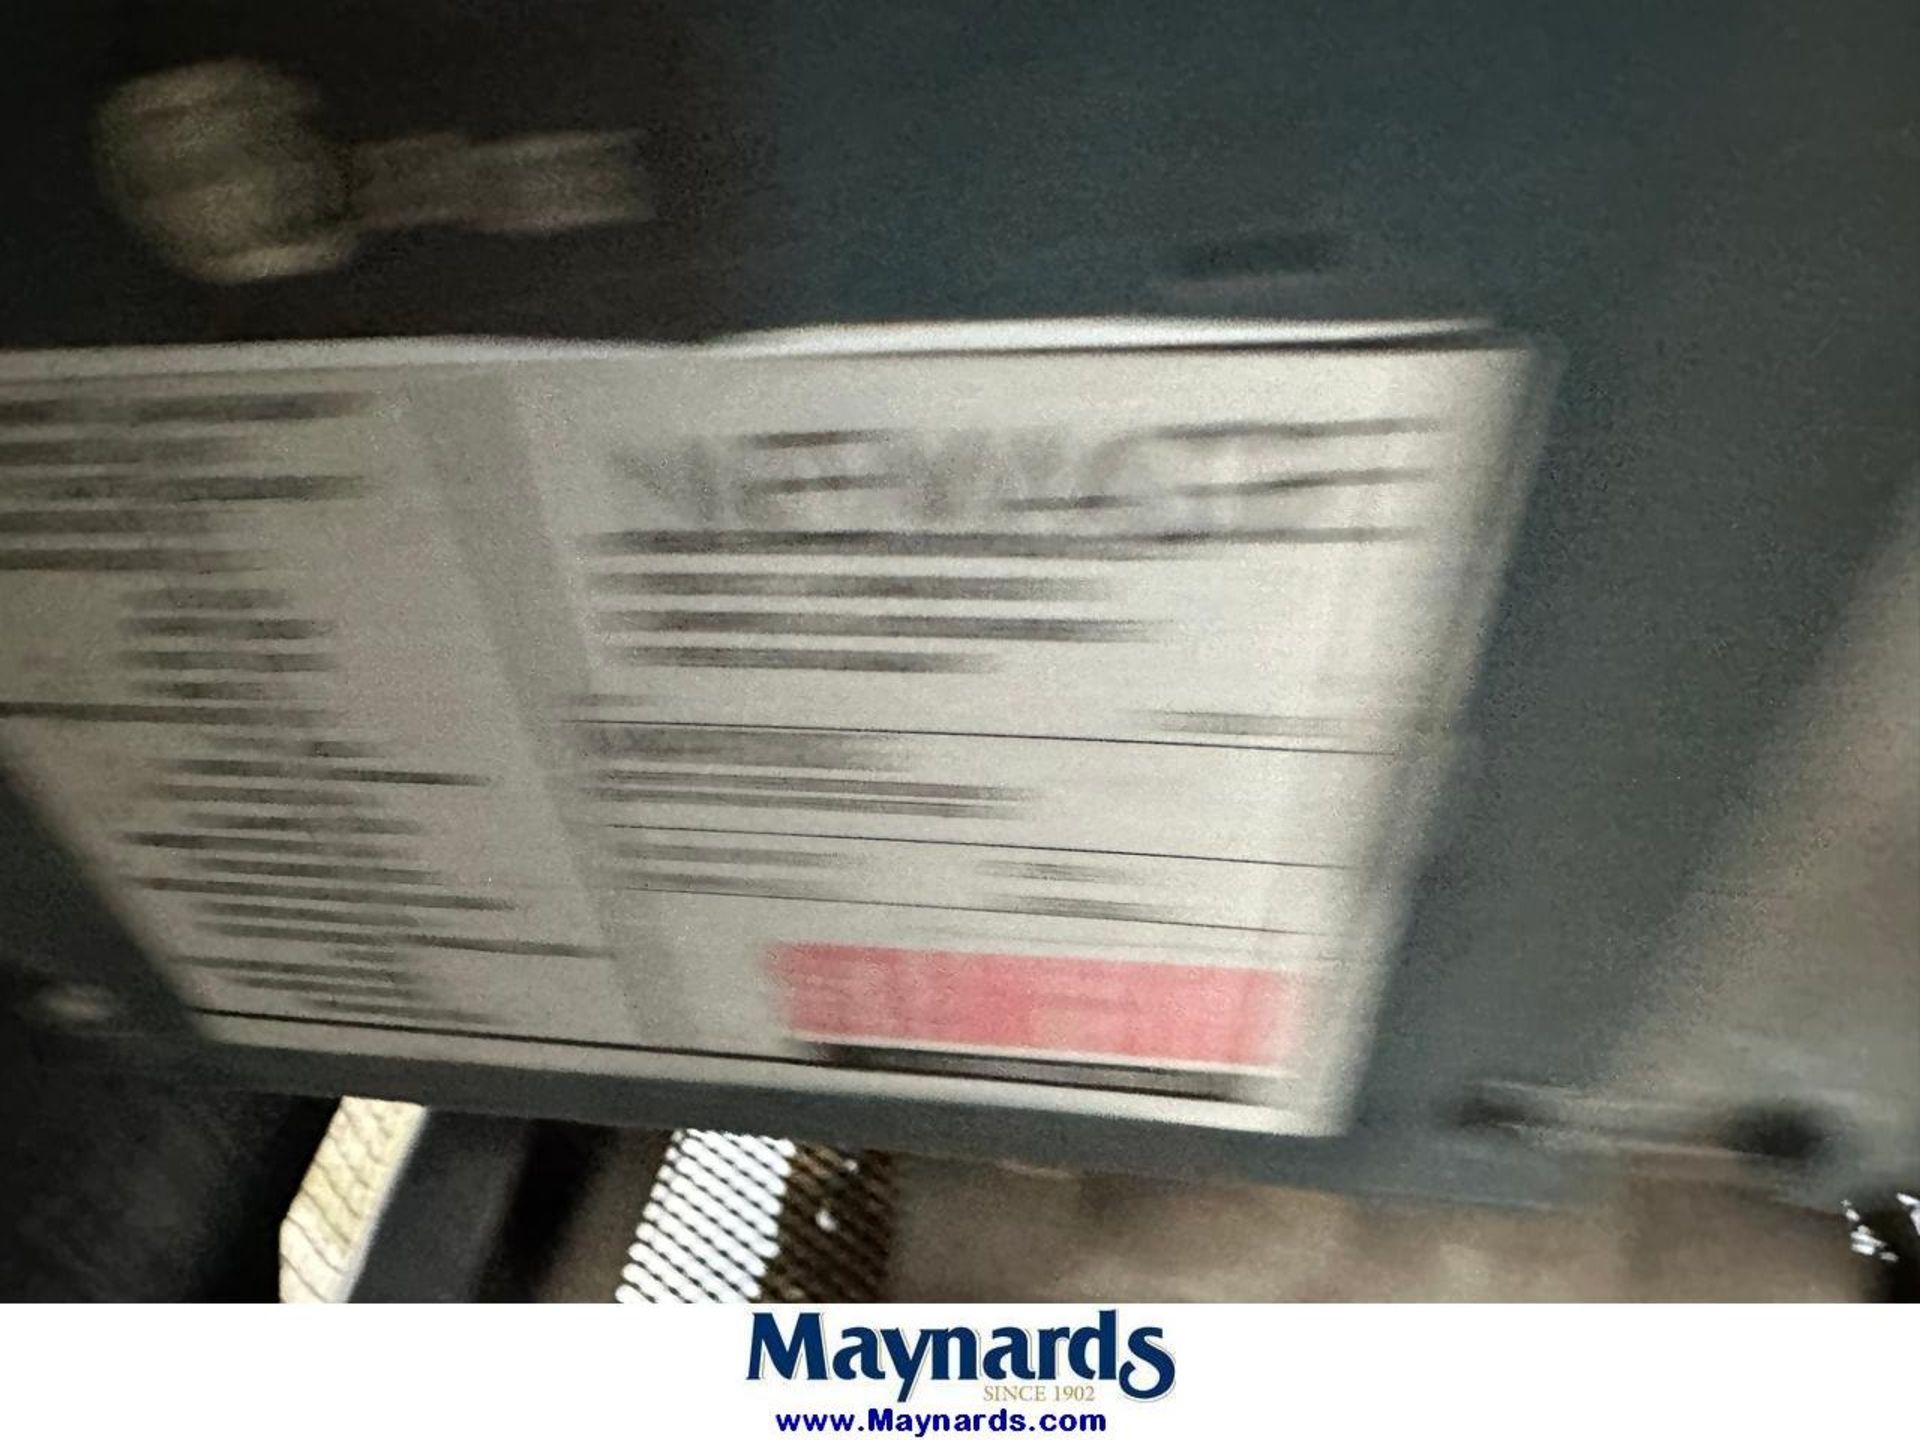 Stamford diesel back-up generator - Image 3 of 6